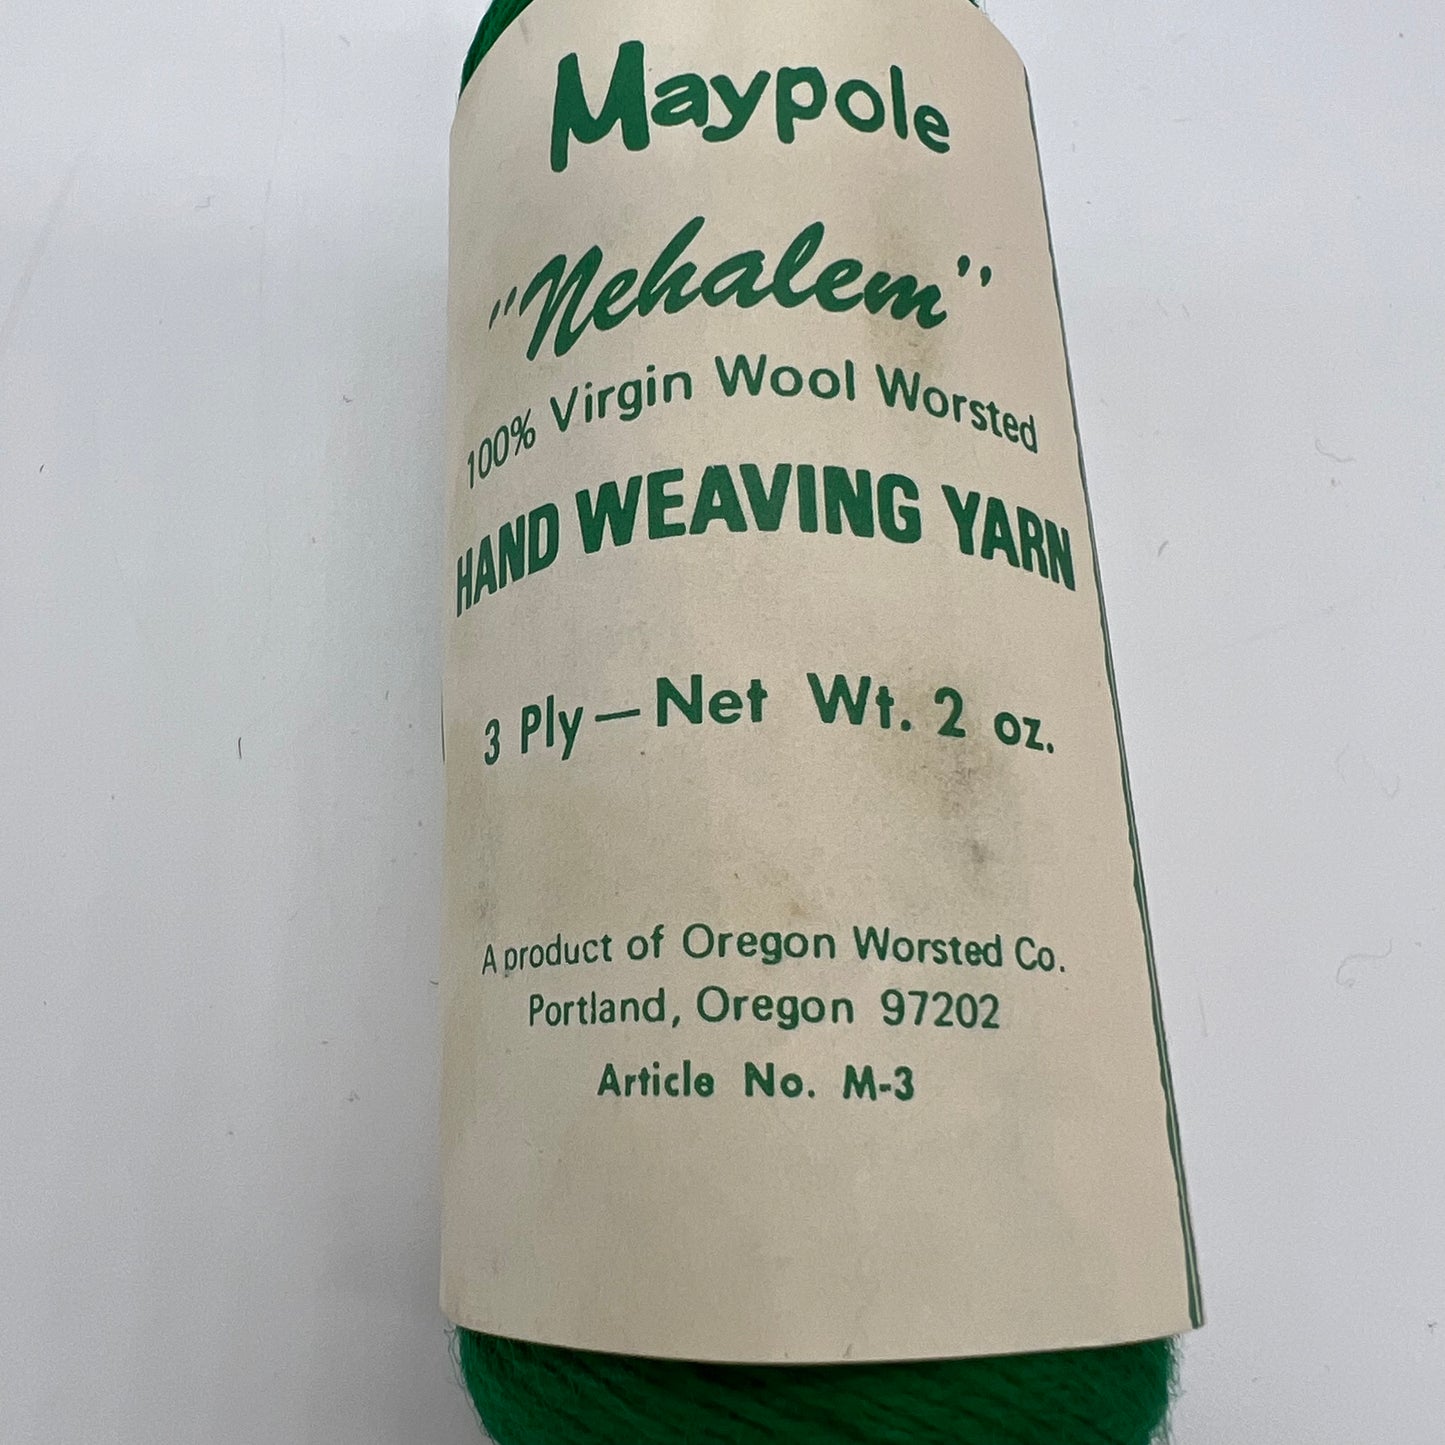 Maypole Nehalem Bright Green Yarn